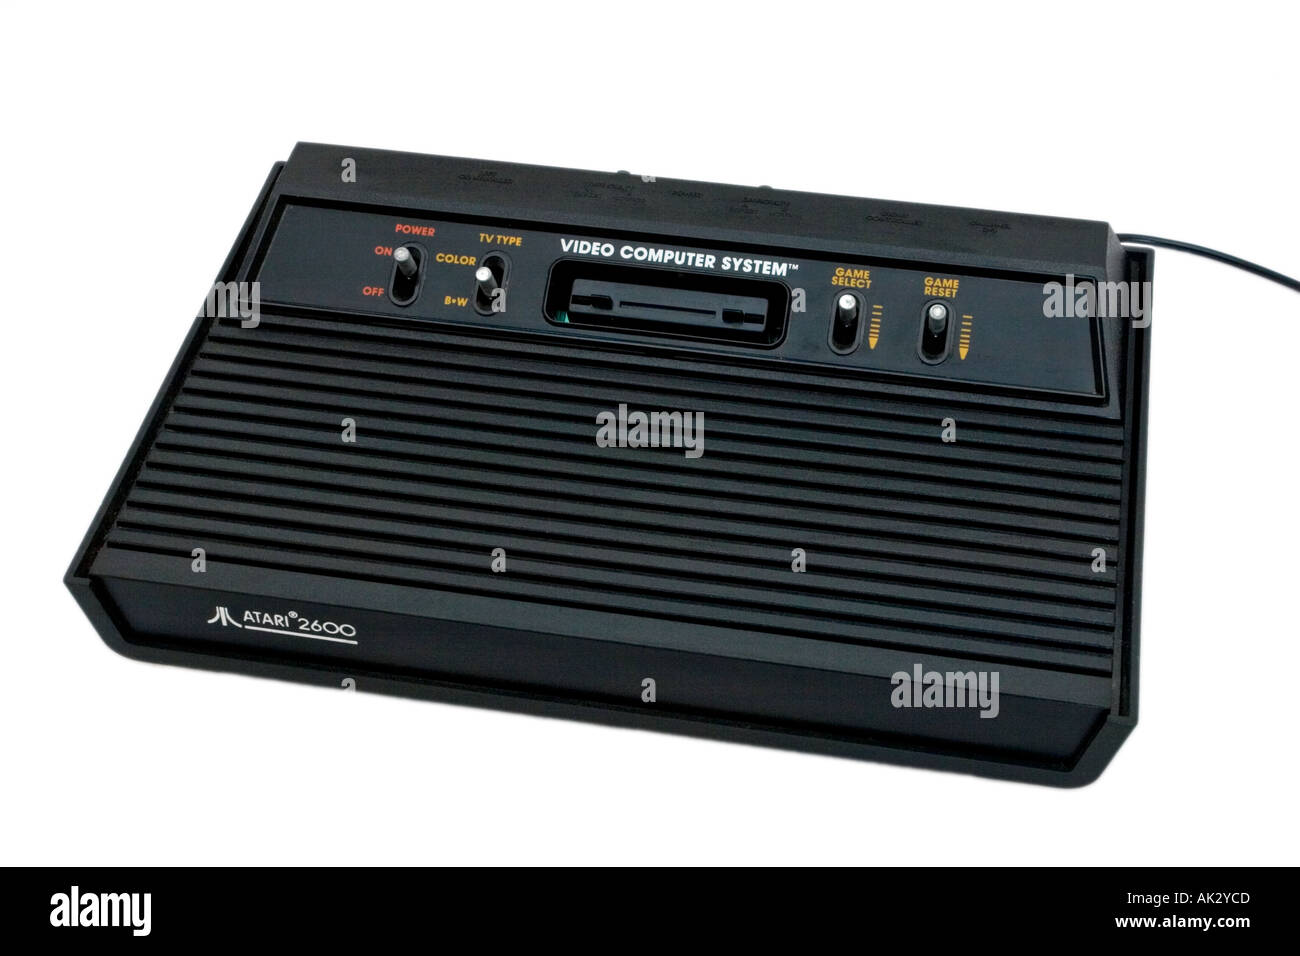 Original model Atari VCS 2600 Video Computer System games console Stock Photo